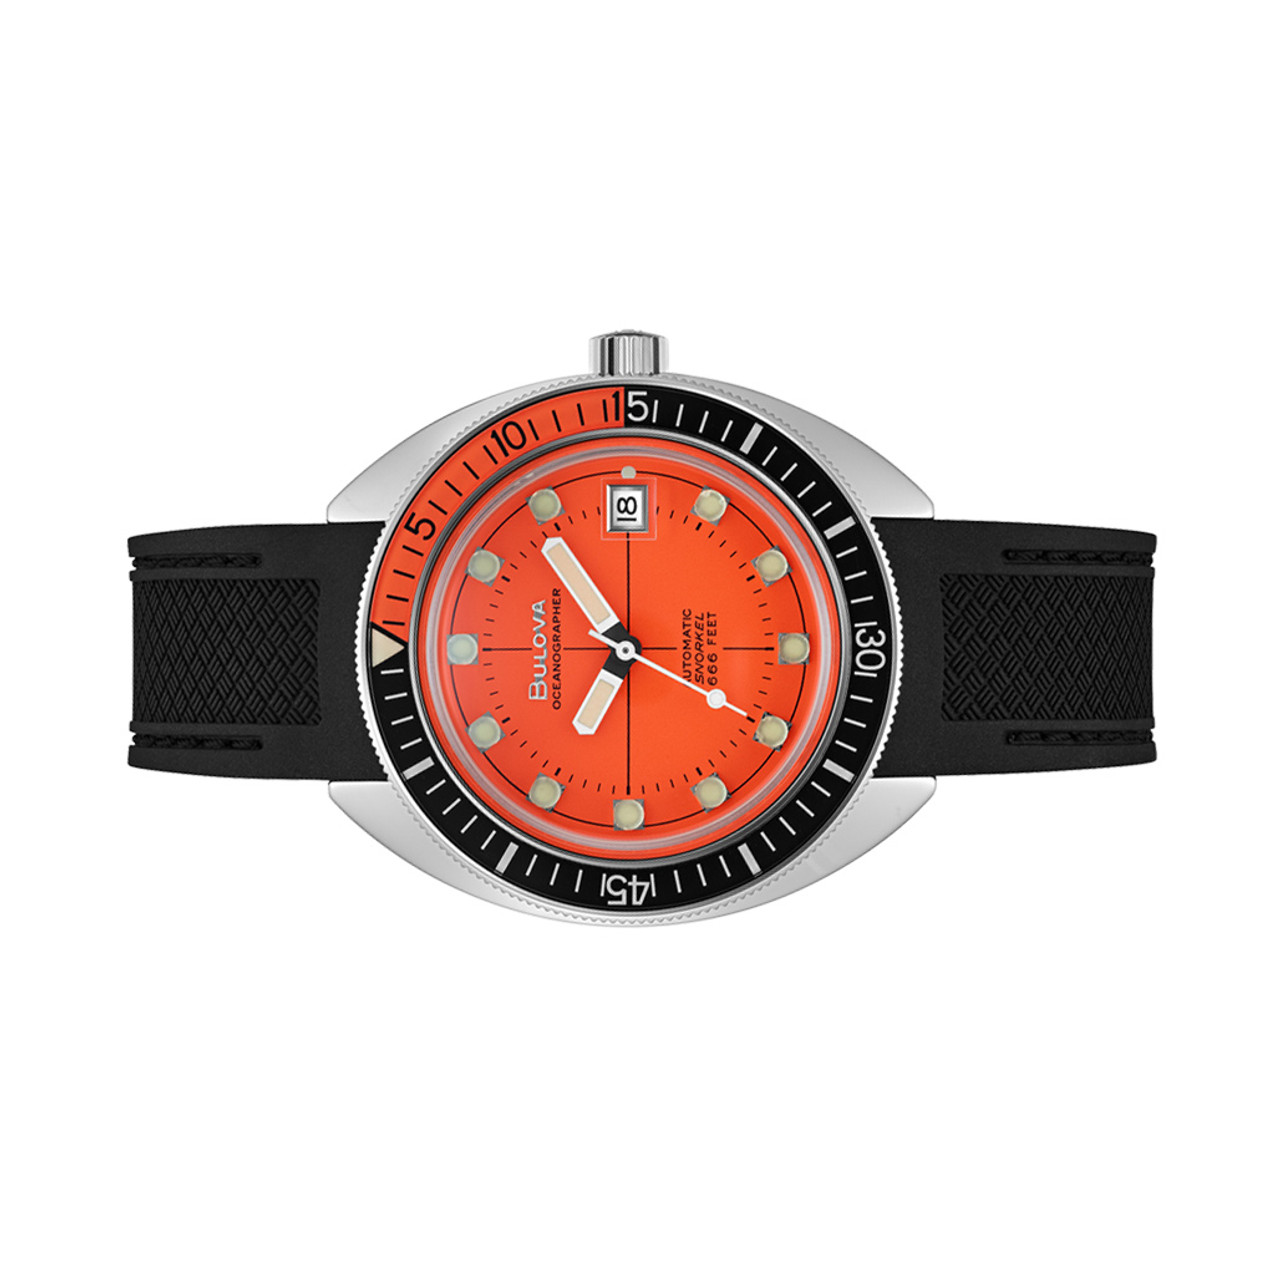 Bulova Oceanographer Snorkel Automatic Dive Watch with Orange Dial #96B350